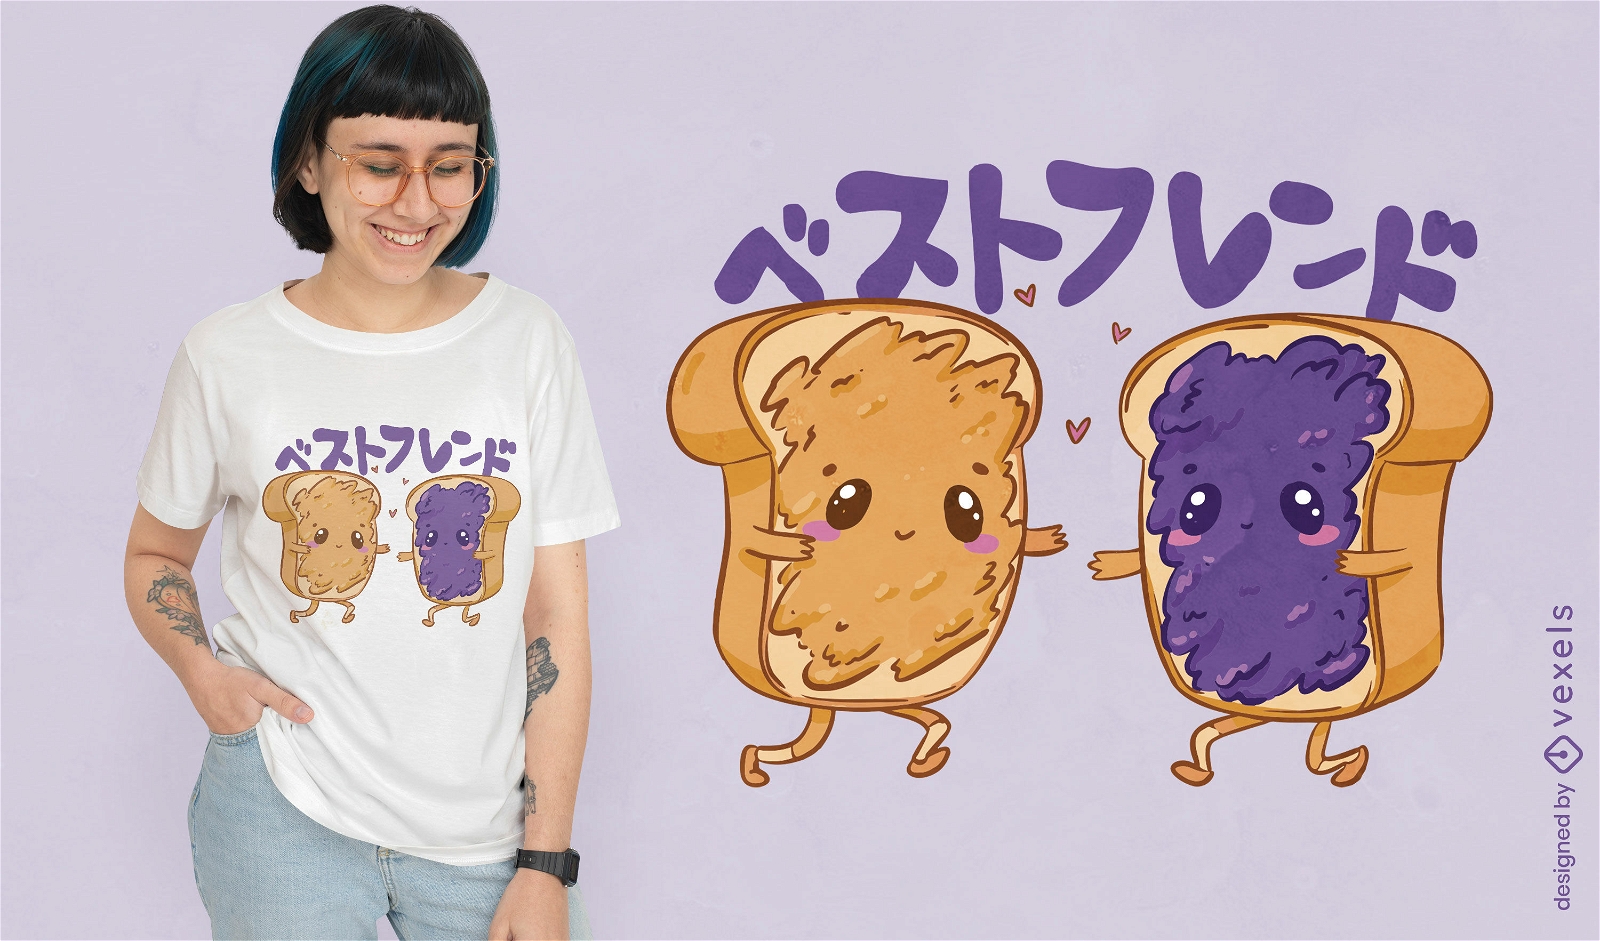 Peanut butter and jelly friends t-shirt design